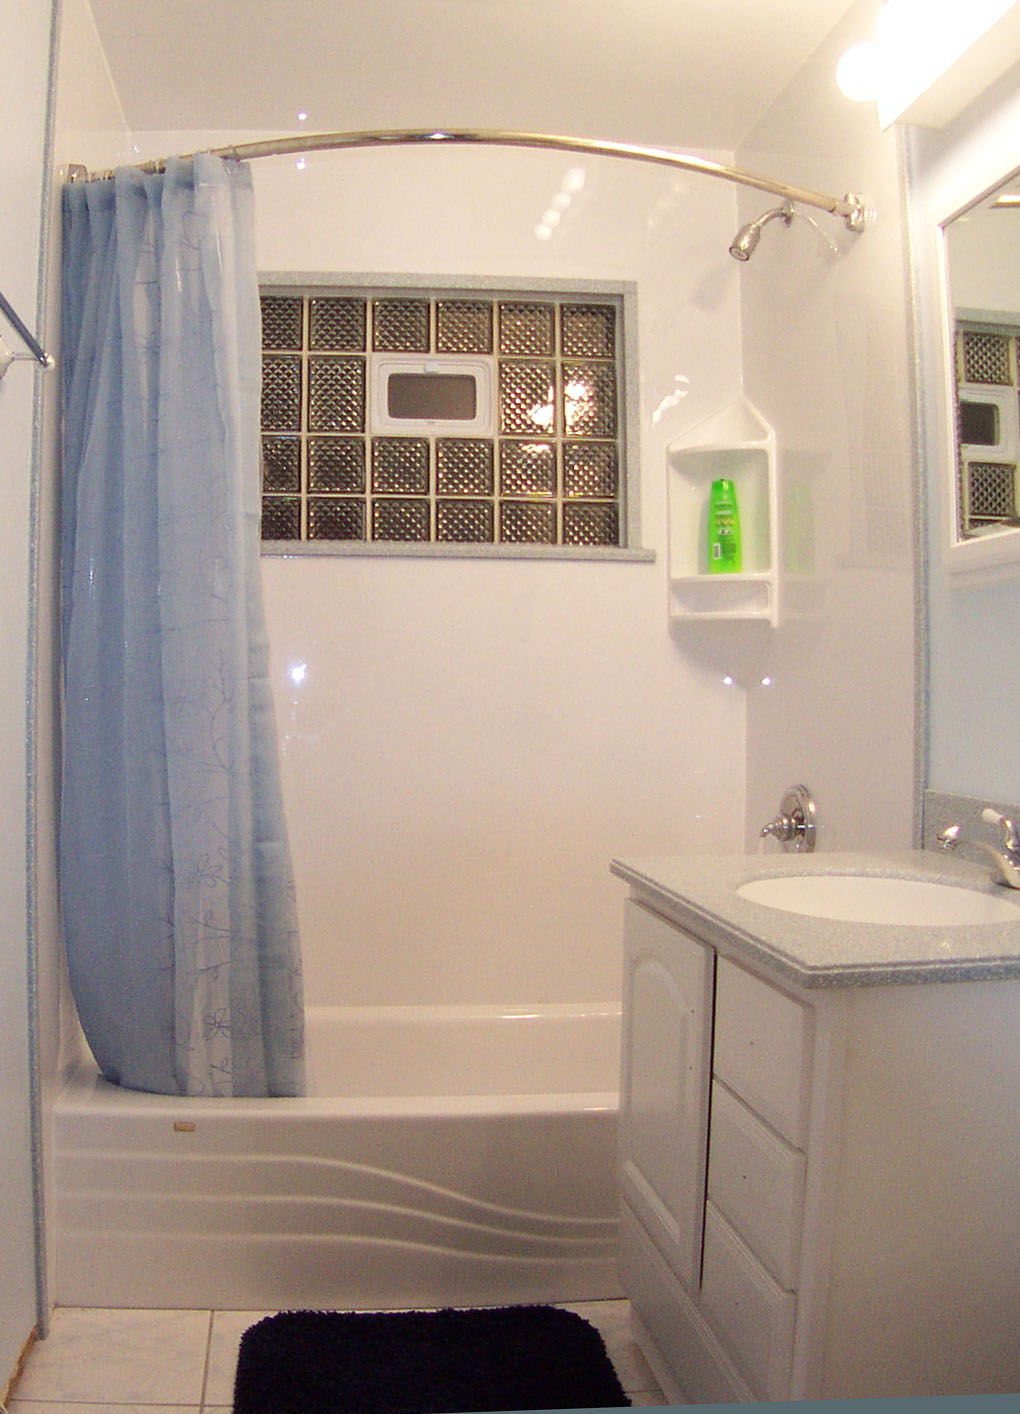 bathroom space bathtub curtain interior efficient stylish homes articles category read